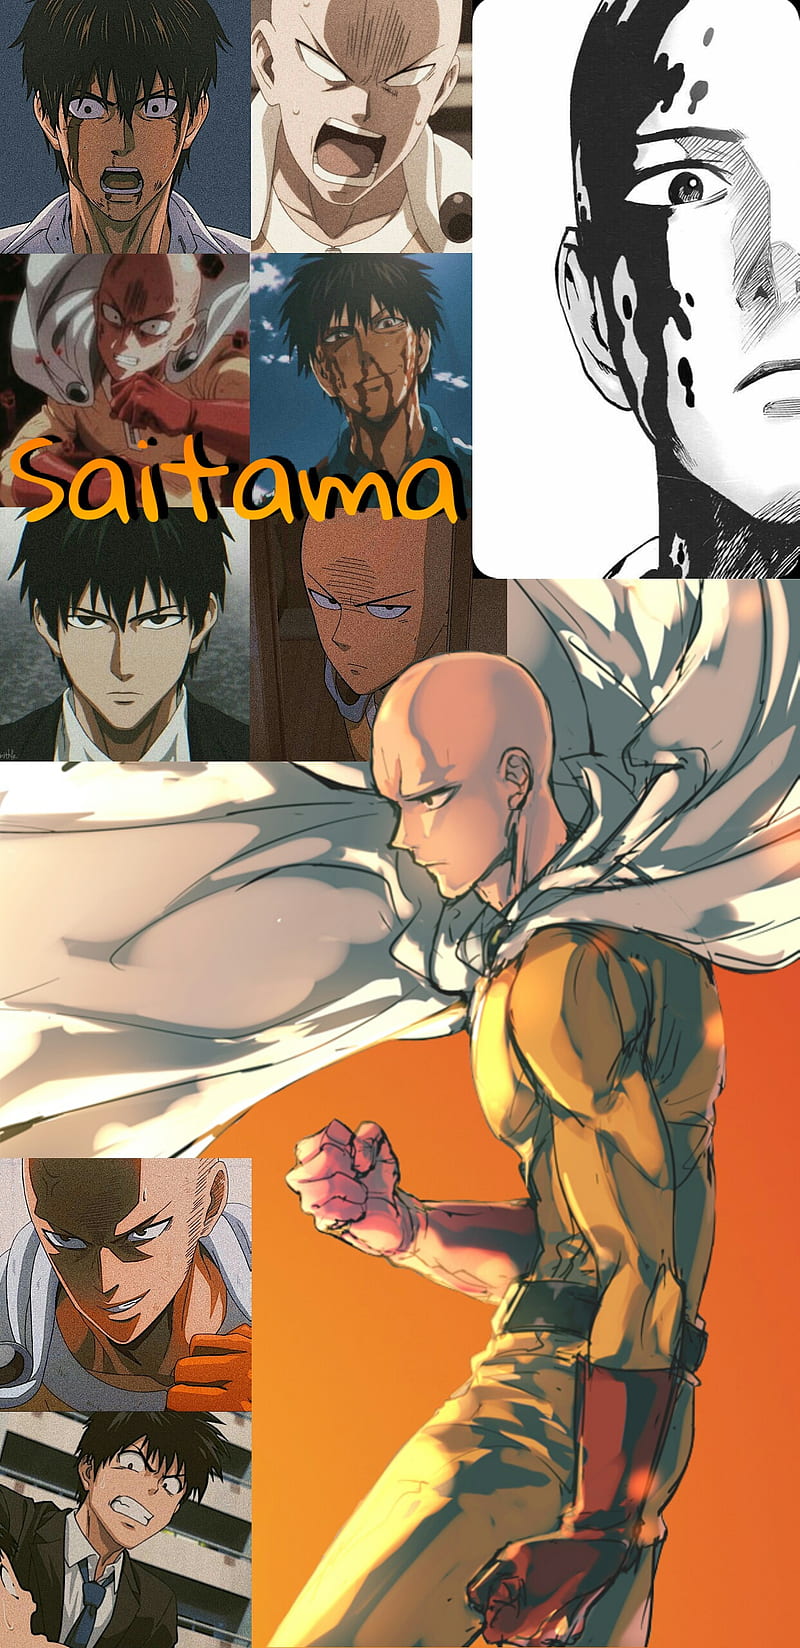 Saitama's Minimalist Design - 4k anime art profile photos - Image